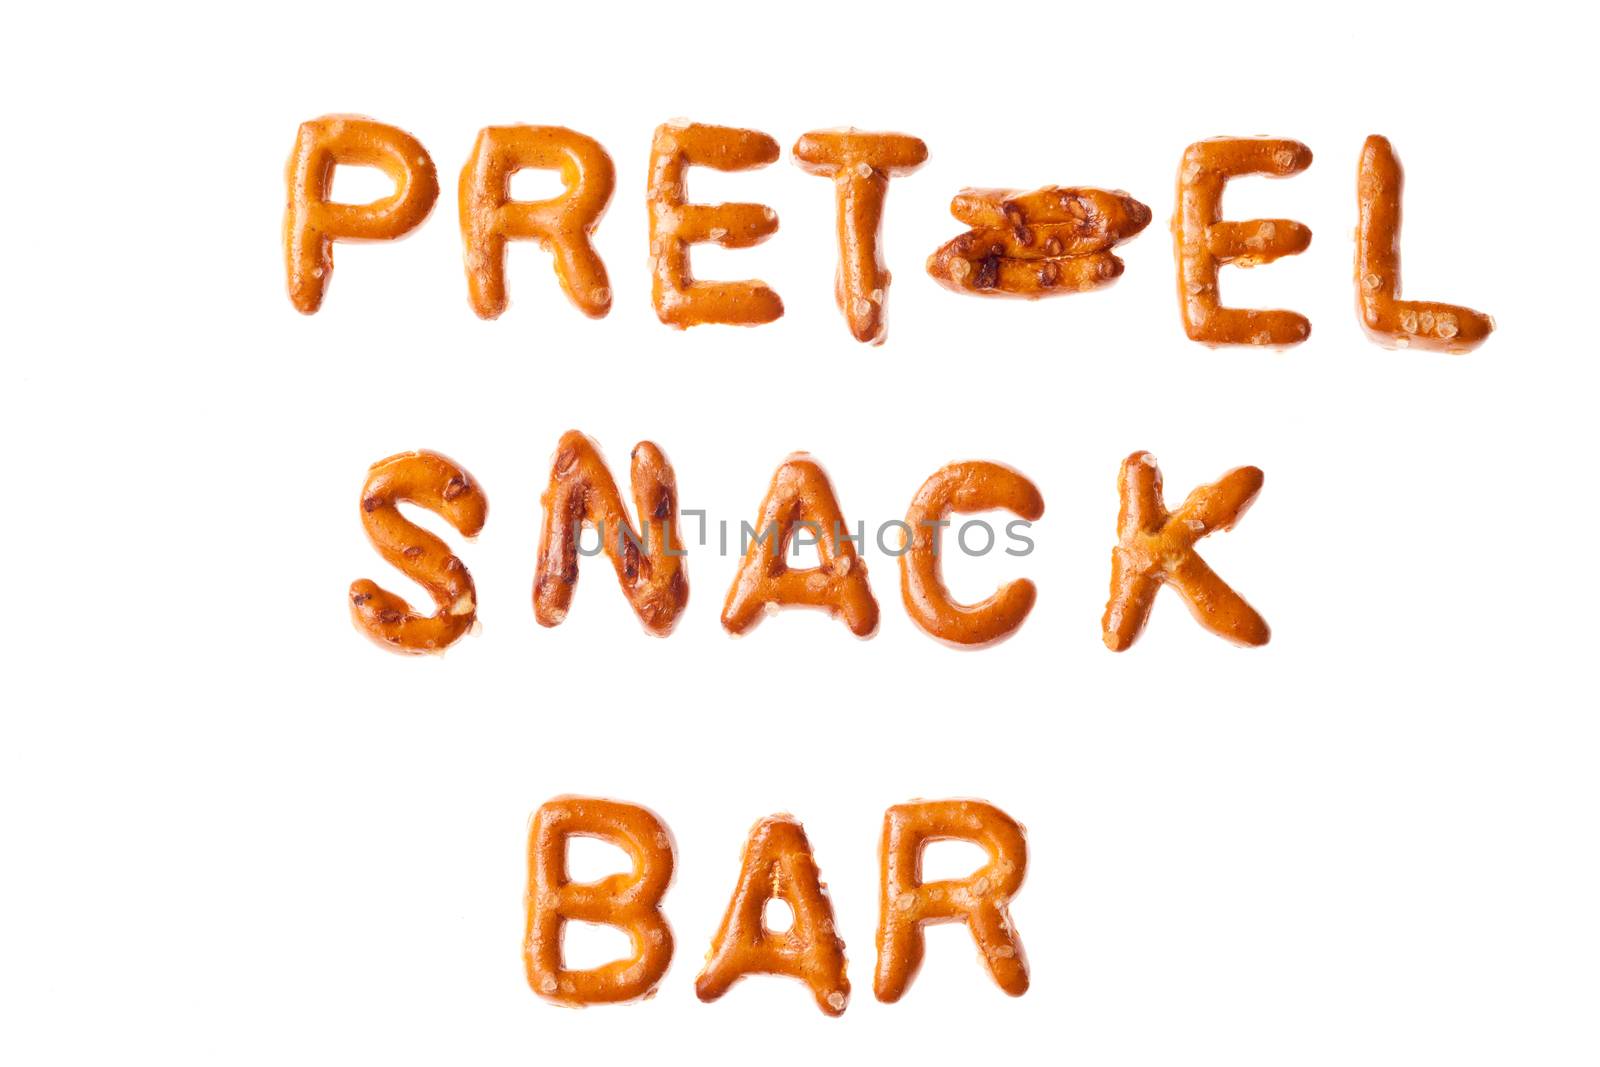 Alphabet pretzel words PRETZEL SNACK BAR isolated by PiLens